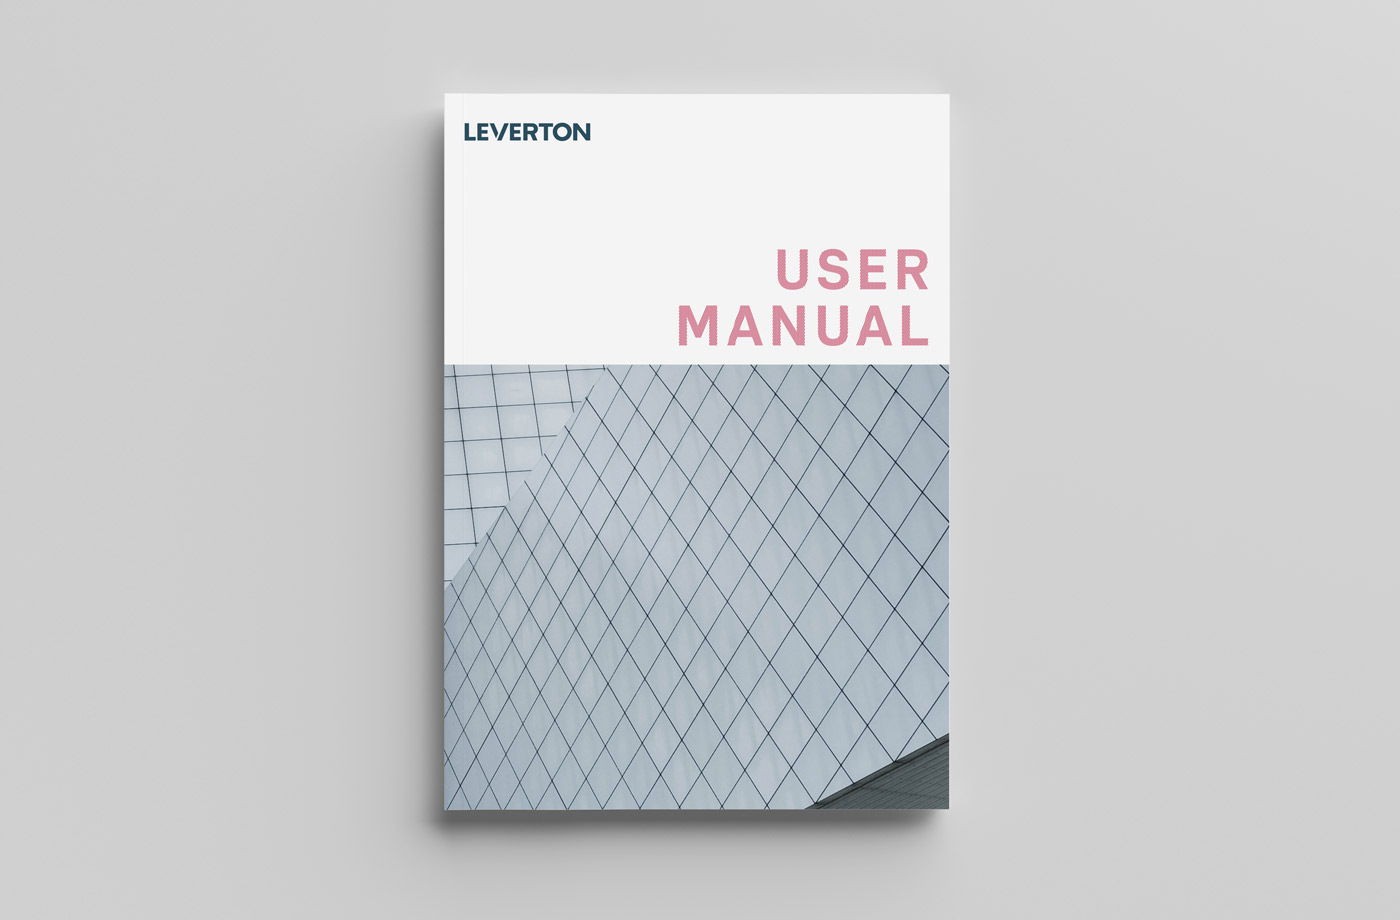 Leverton Corporate Design Cover – Uthmöller und Partner